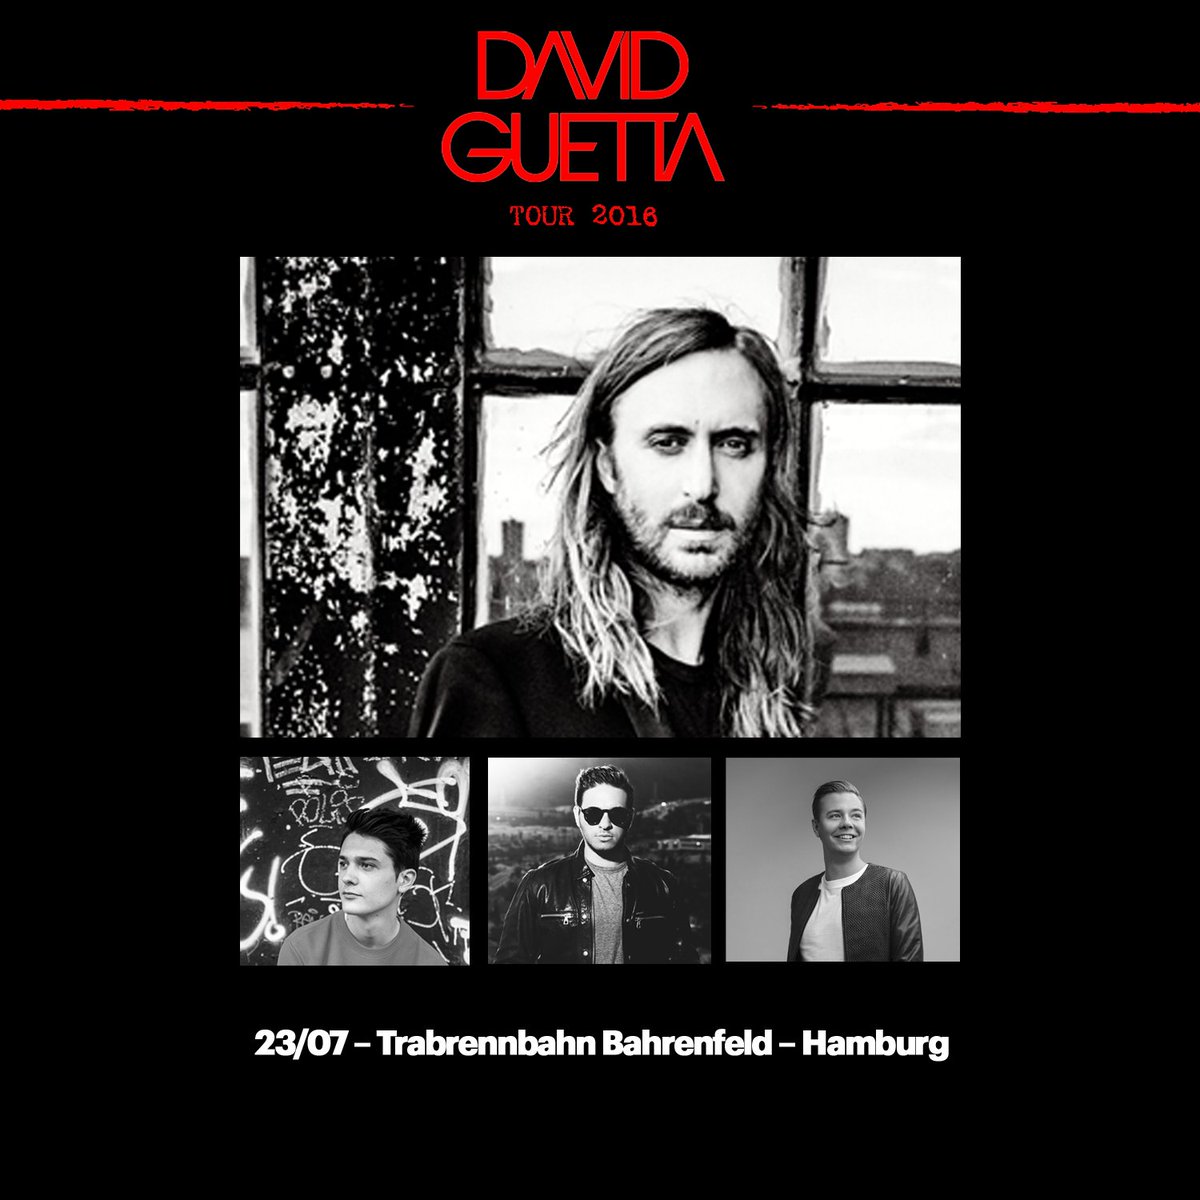 RT @JonasBlueMusic: Hamburg with @DavidGuetta, @KungsMusic & @SamFeldtMusic promises to be a big one tonight! ???? https://t.co/oQjofRqFmQ